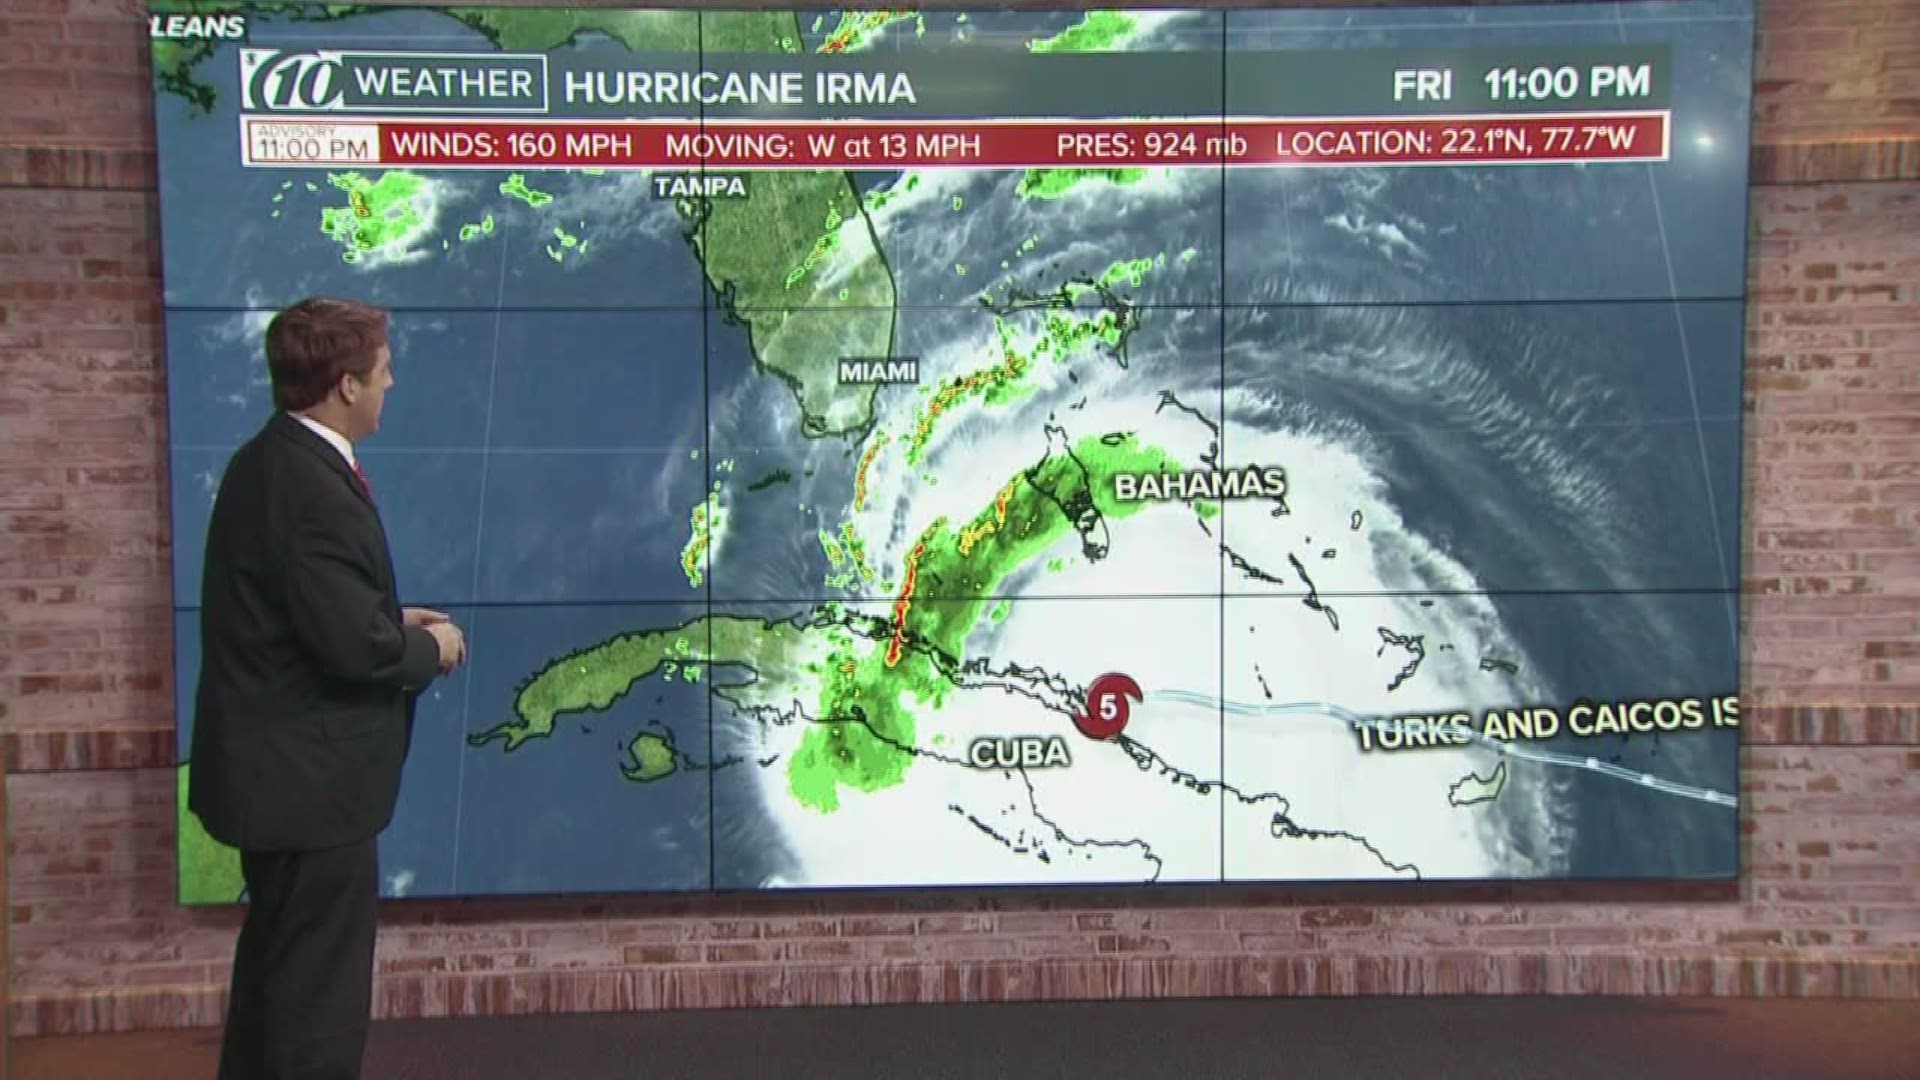 The 11 p.m. Friday forecast for Irma.